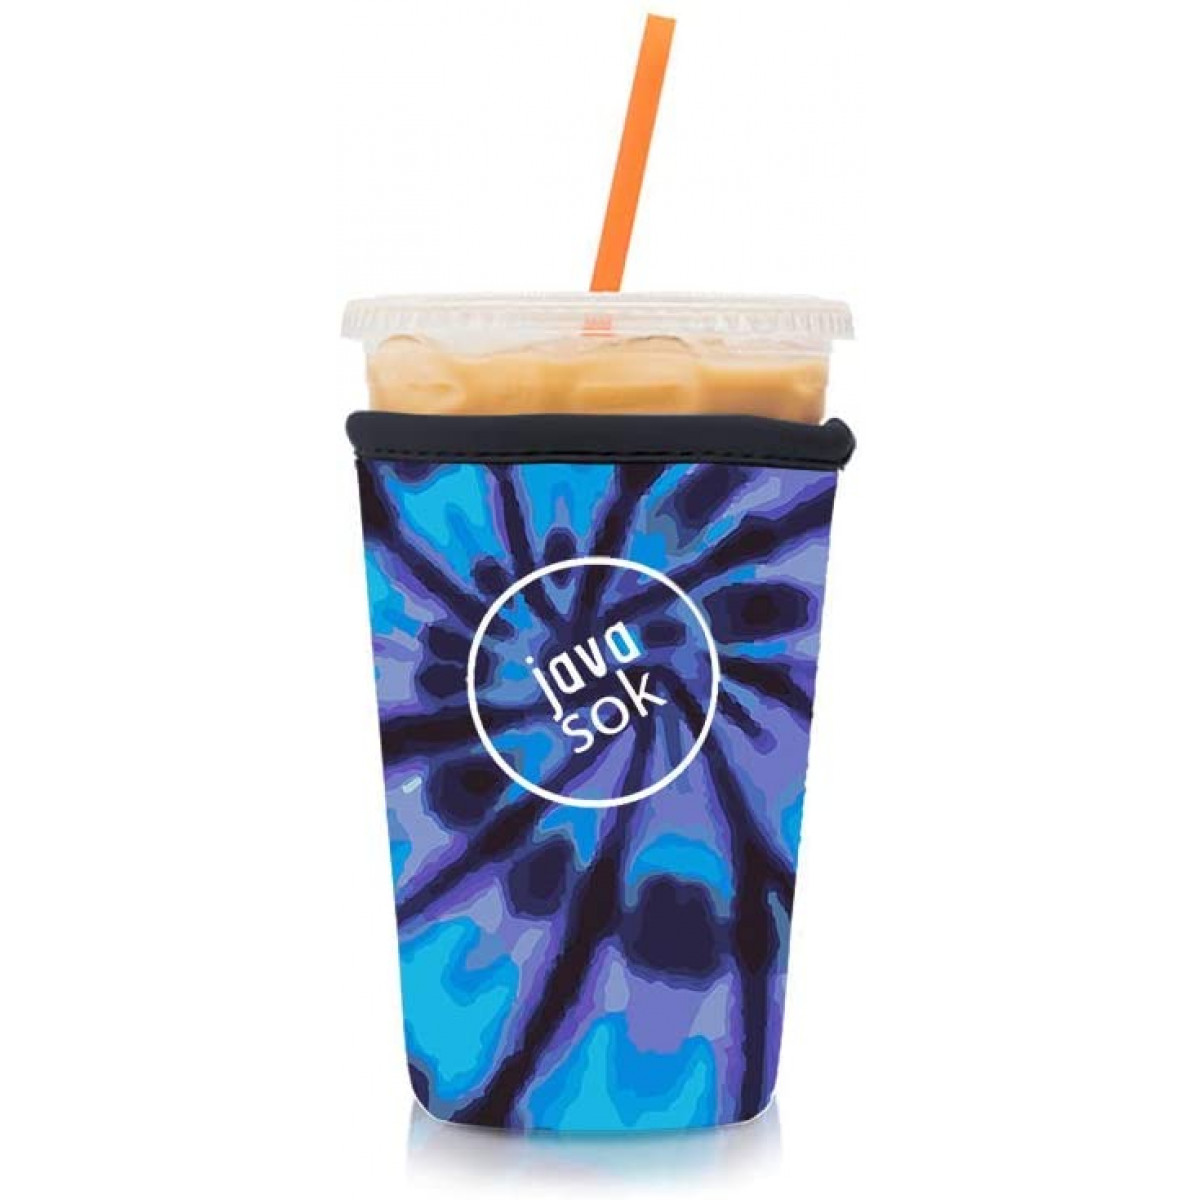 Java Sok Reusable Iced Coffee Cup Insulator Sleeve for